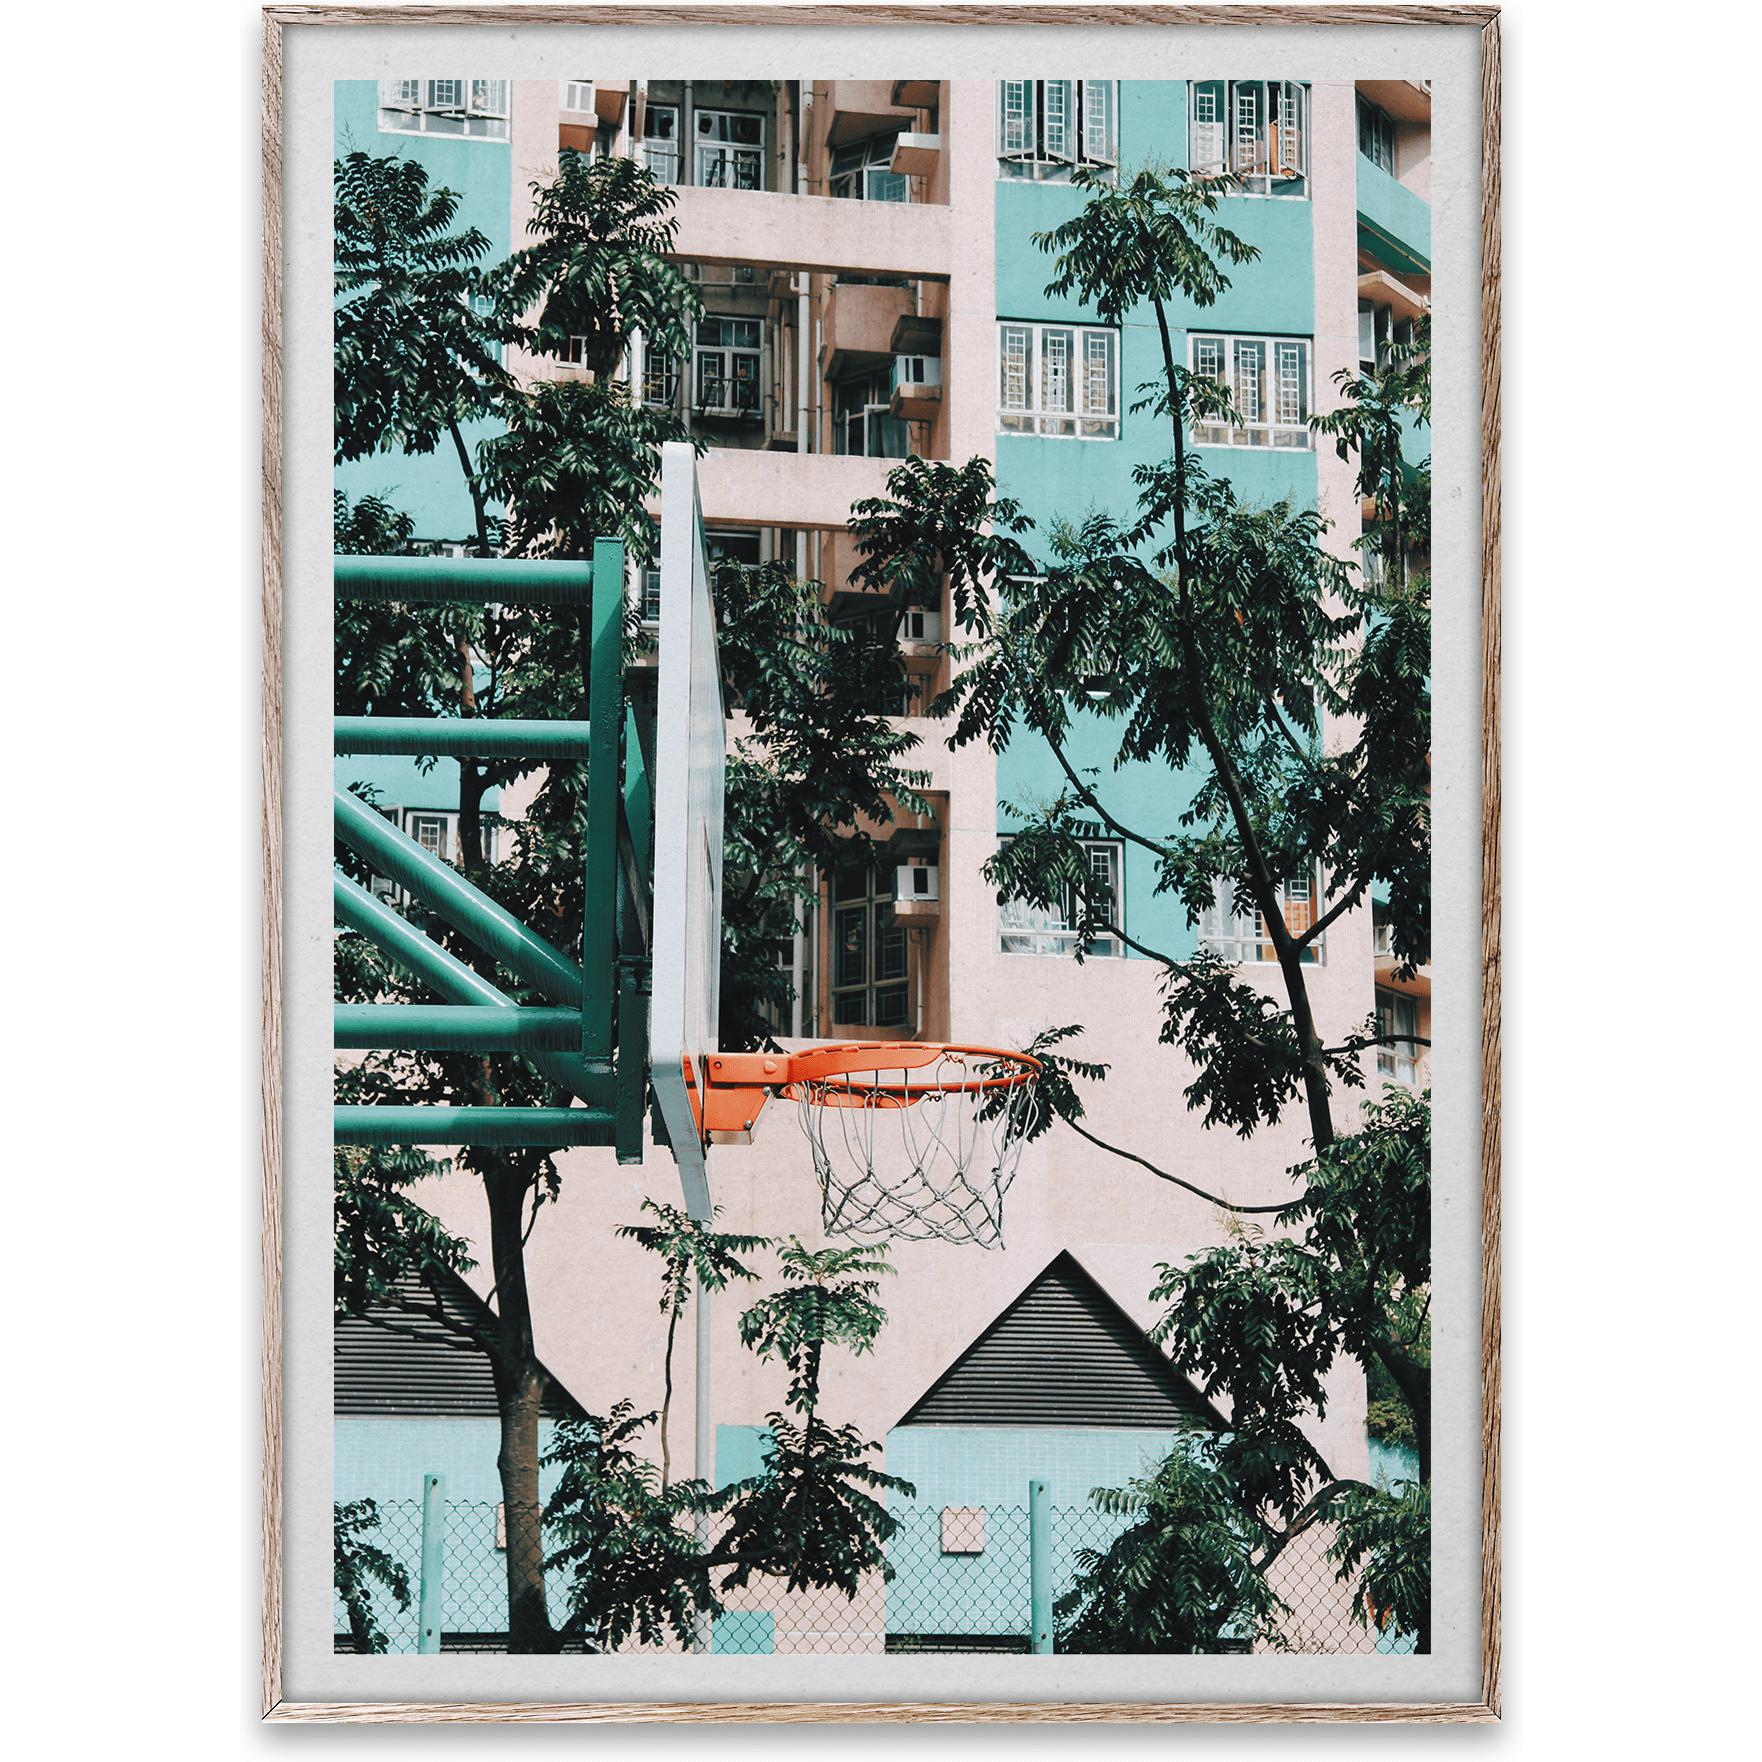 Cidades coletivas de papel de basquete 01, pôster de Hong Kong, 50x70 cm